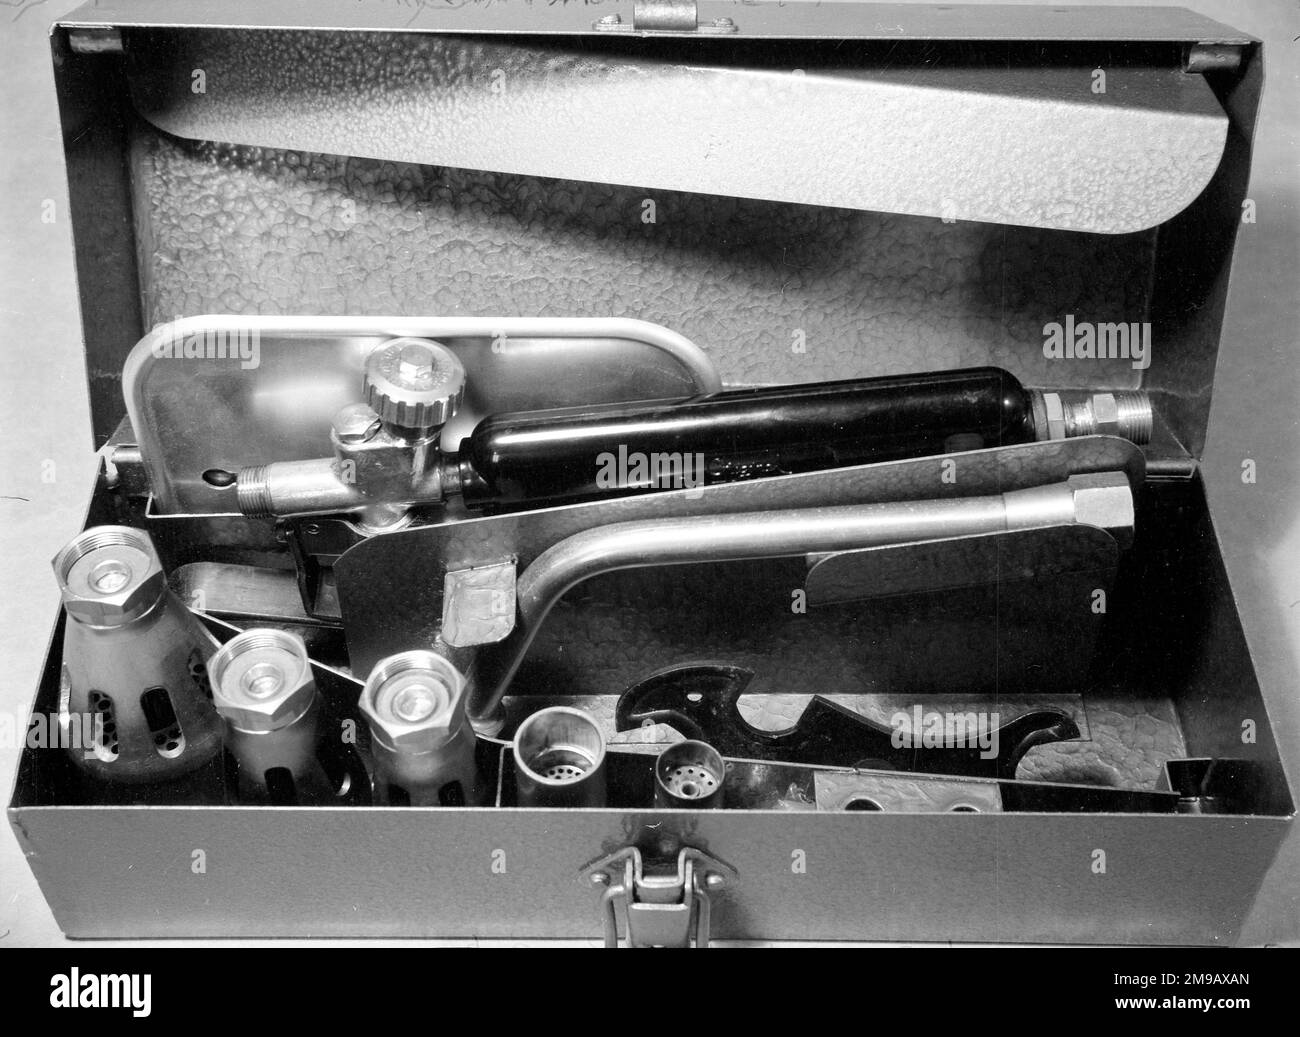 Sievert gas blow torch kit. Stock Photo